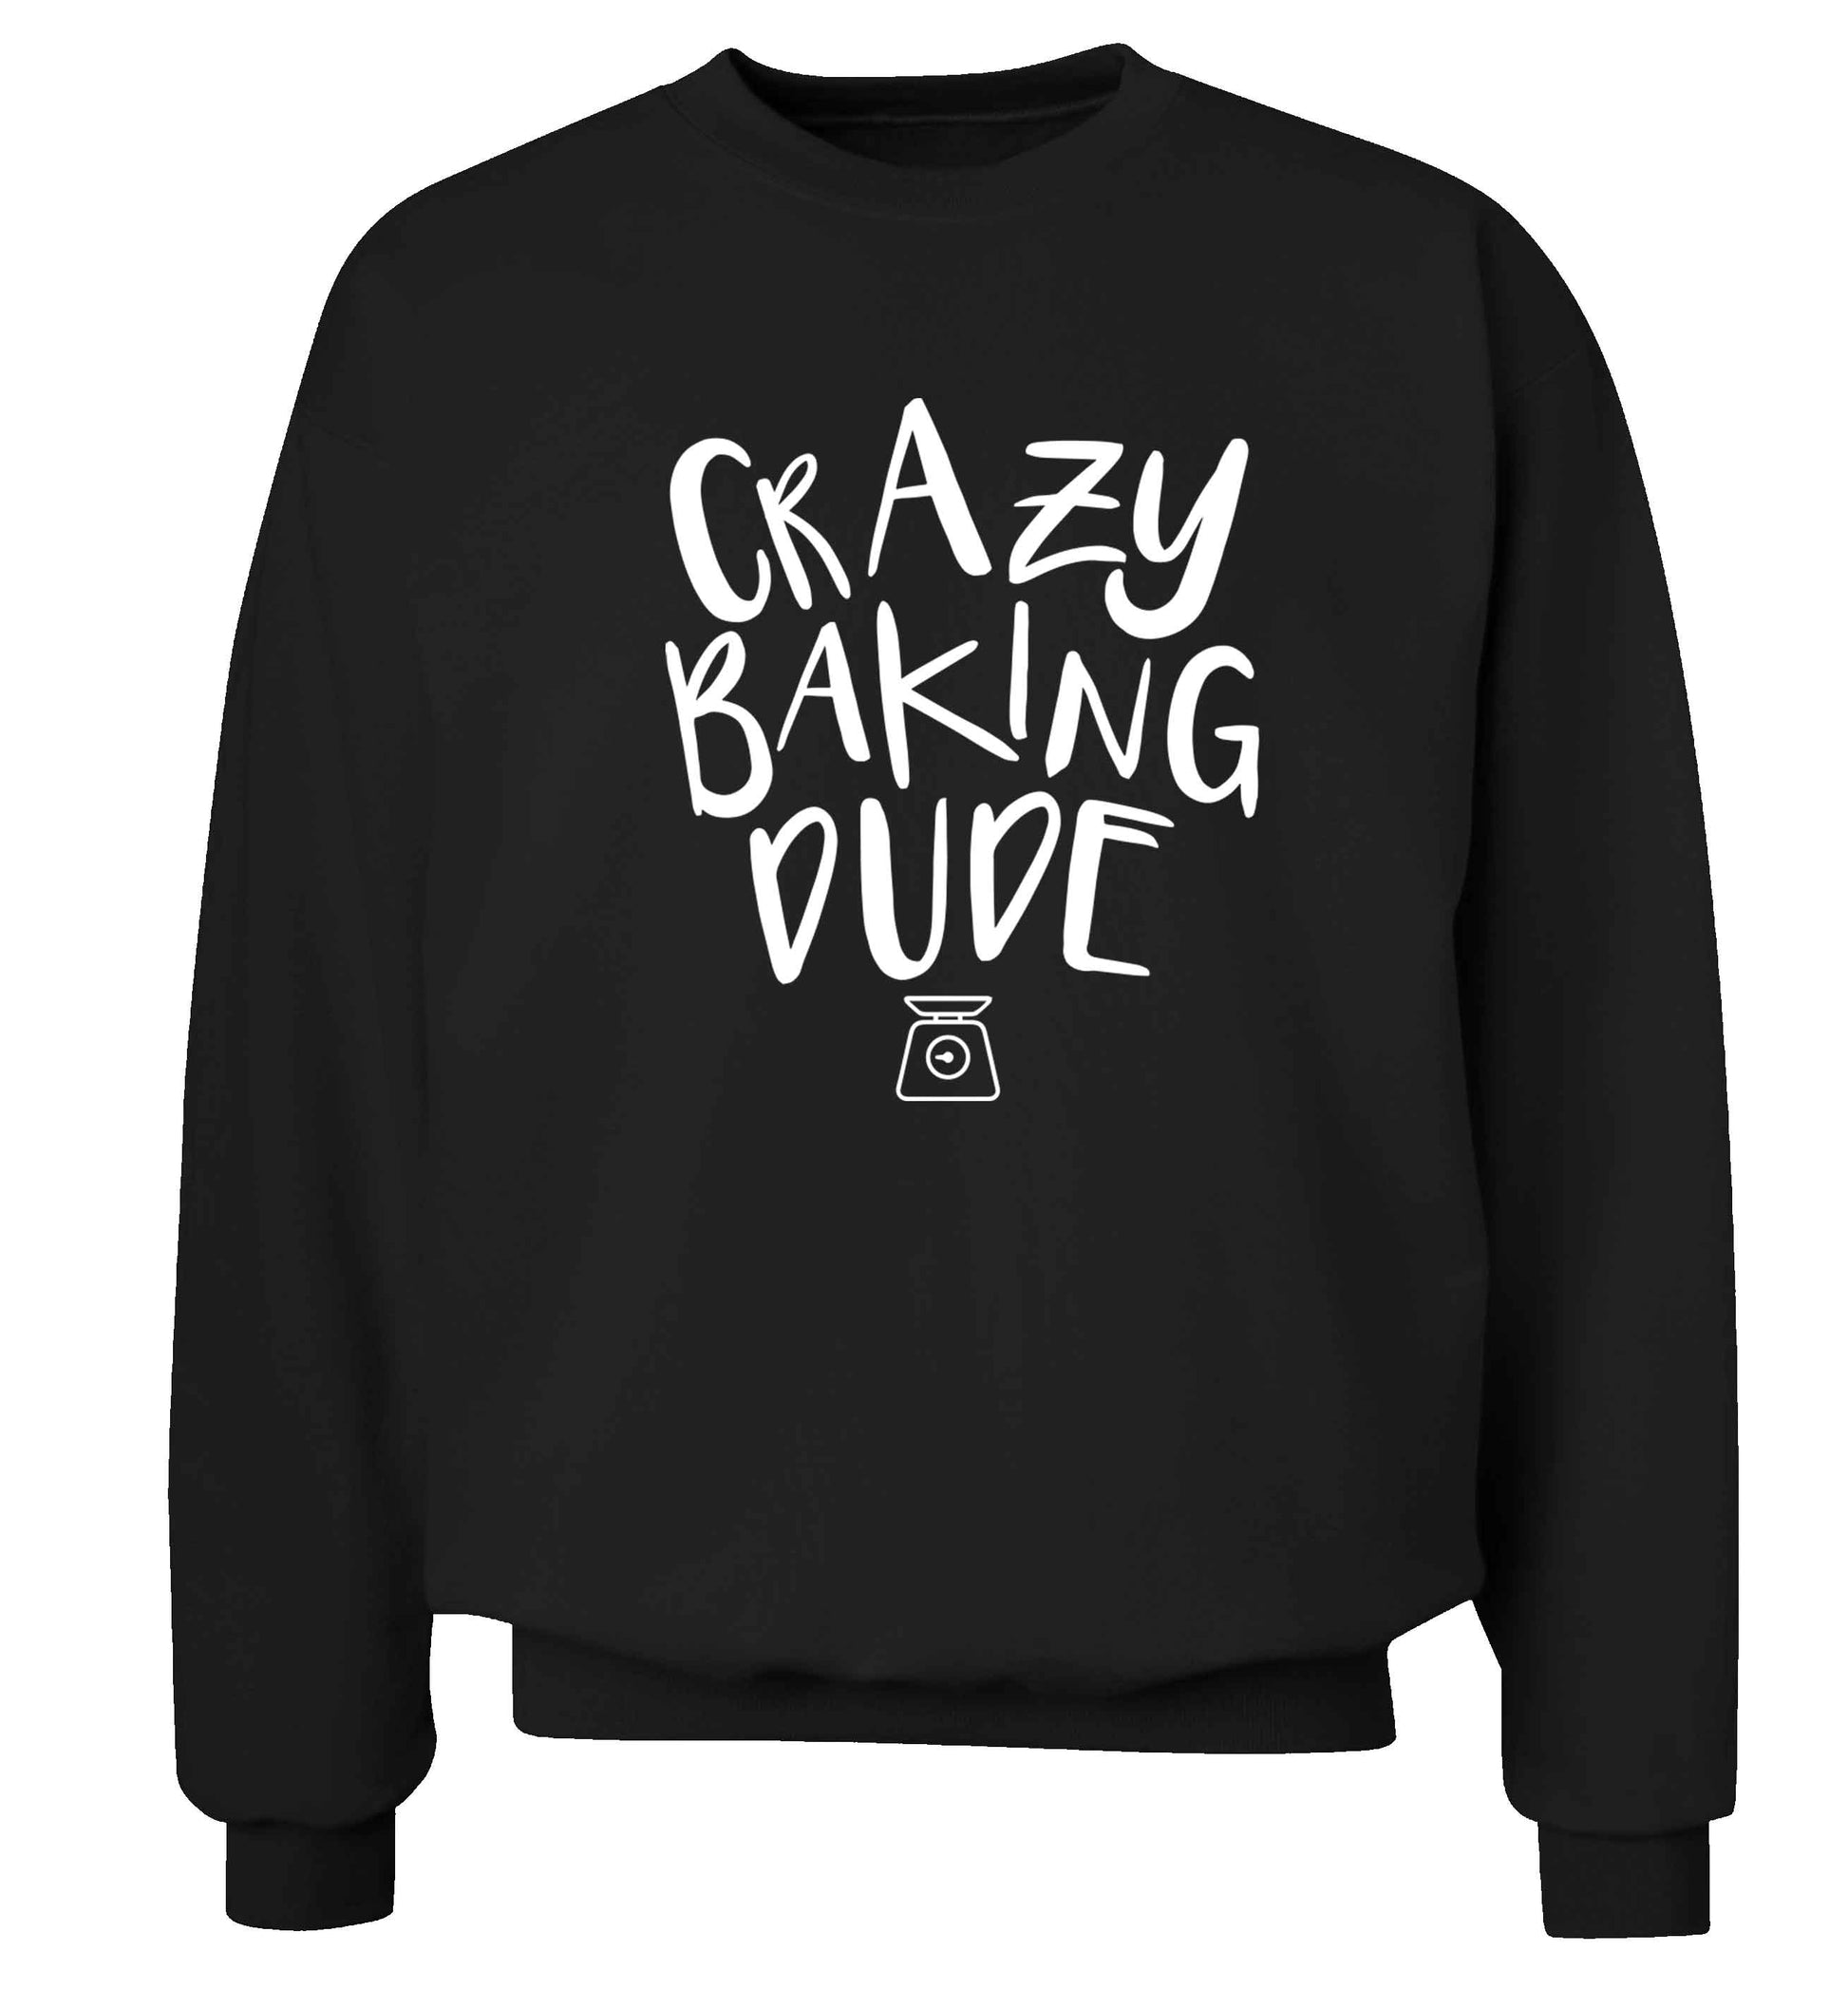 Crazy baking dude Adult's unisex black Sweater 2XL